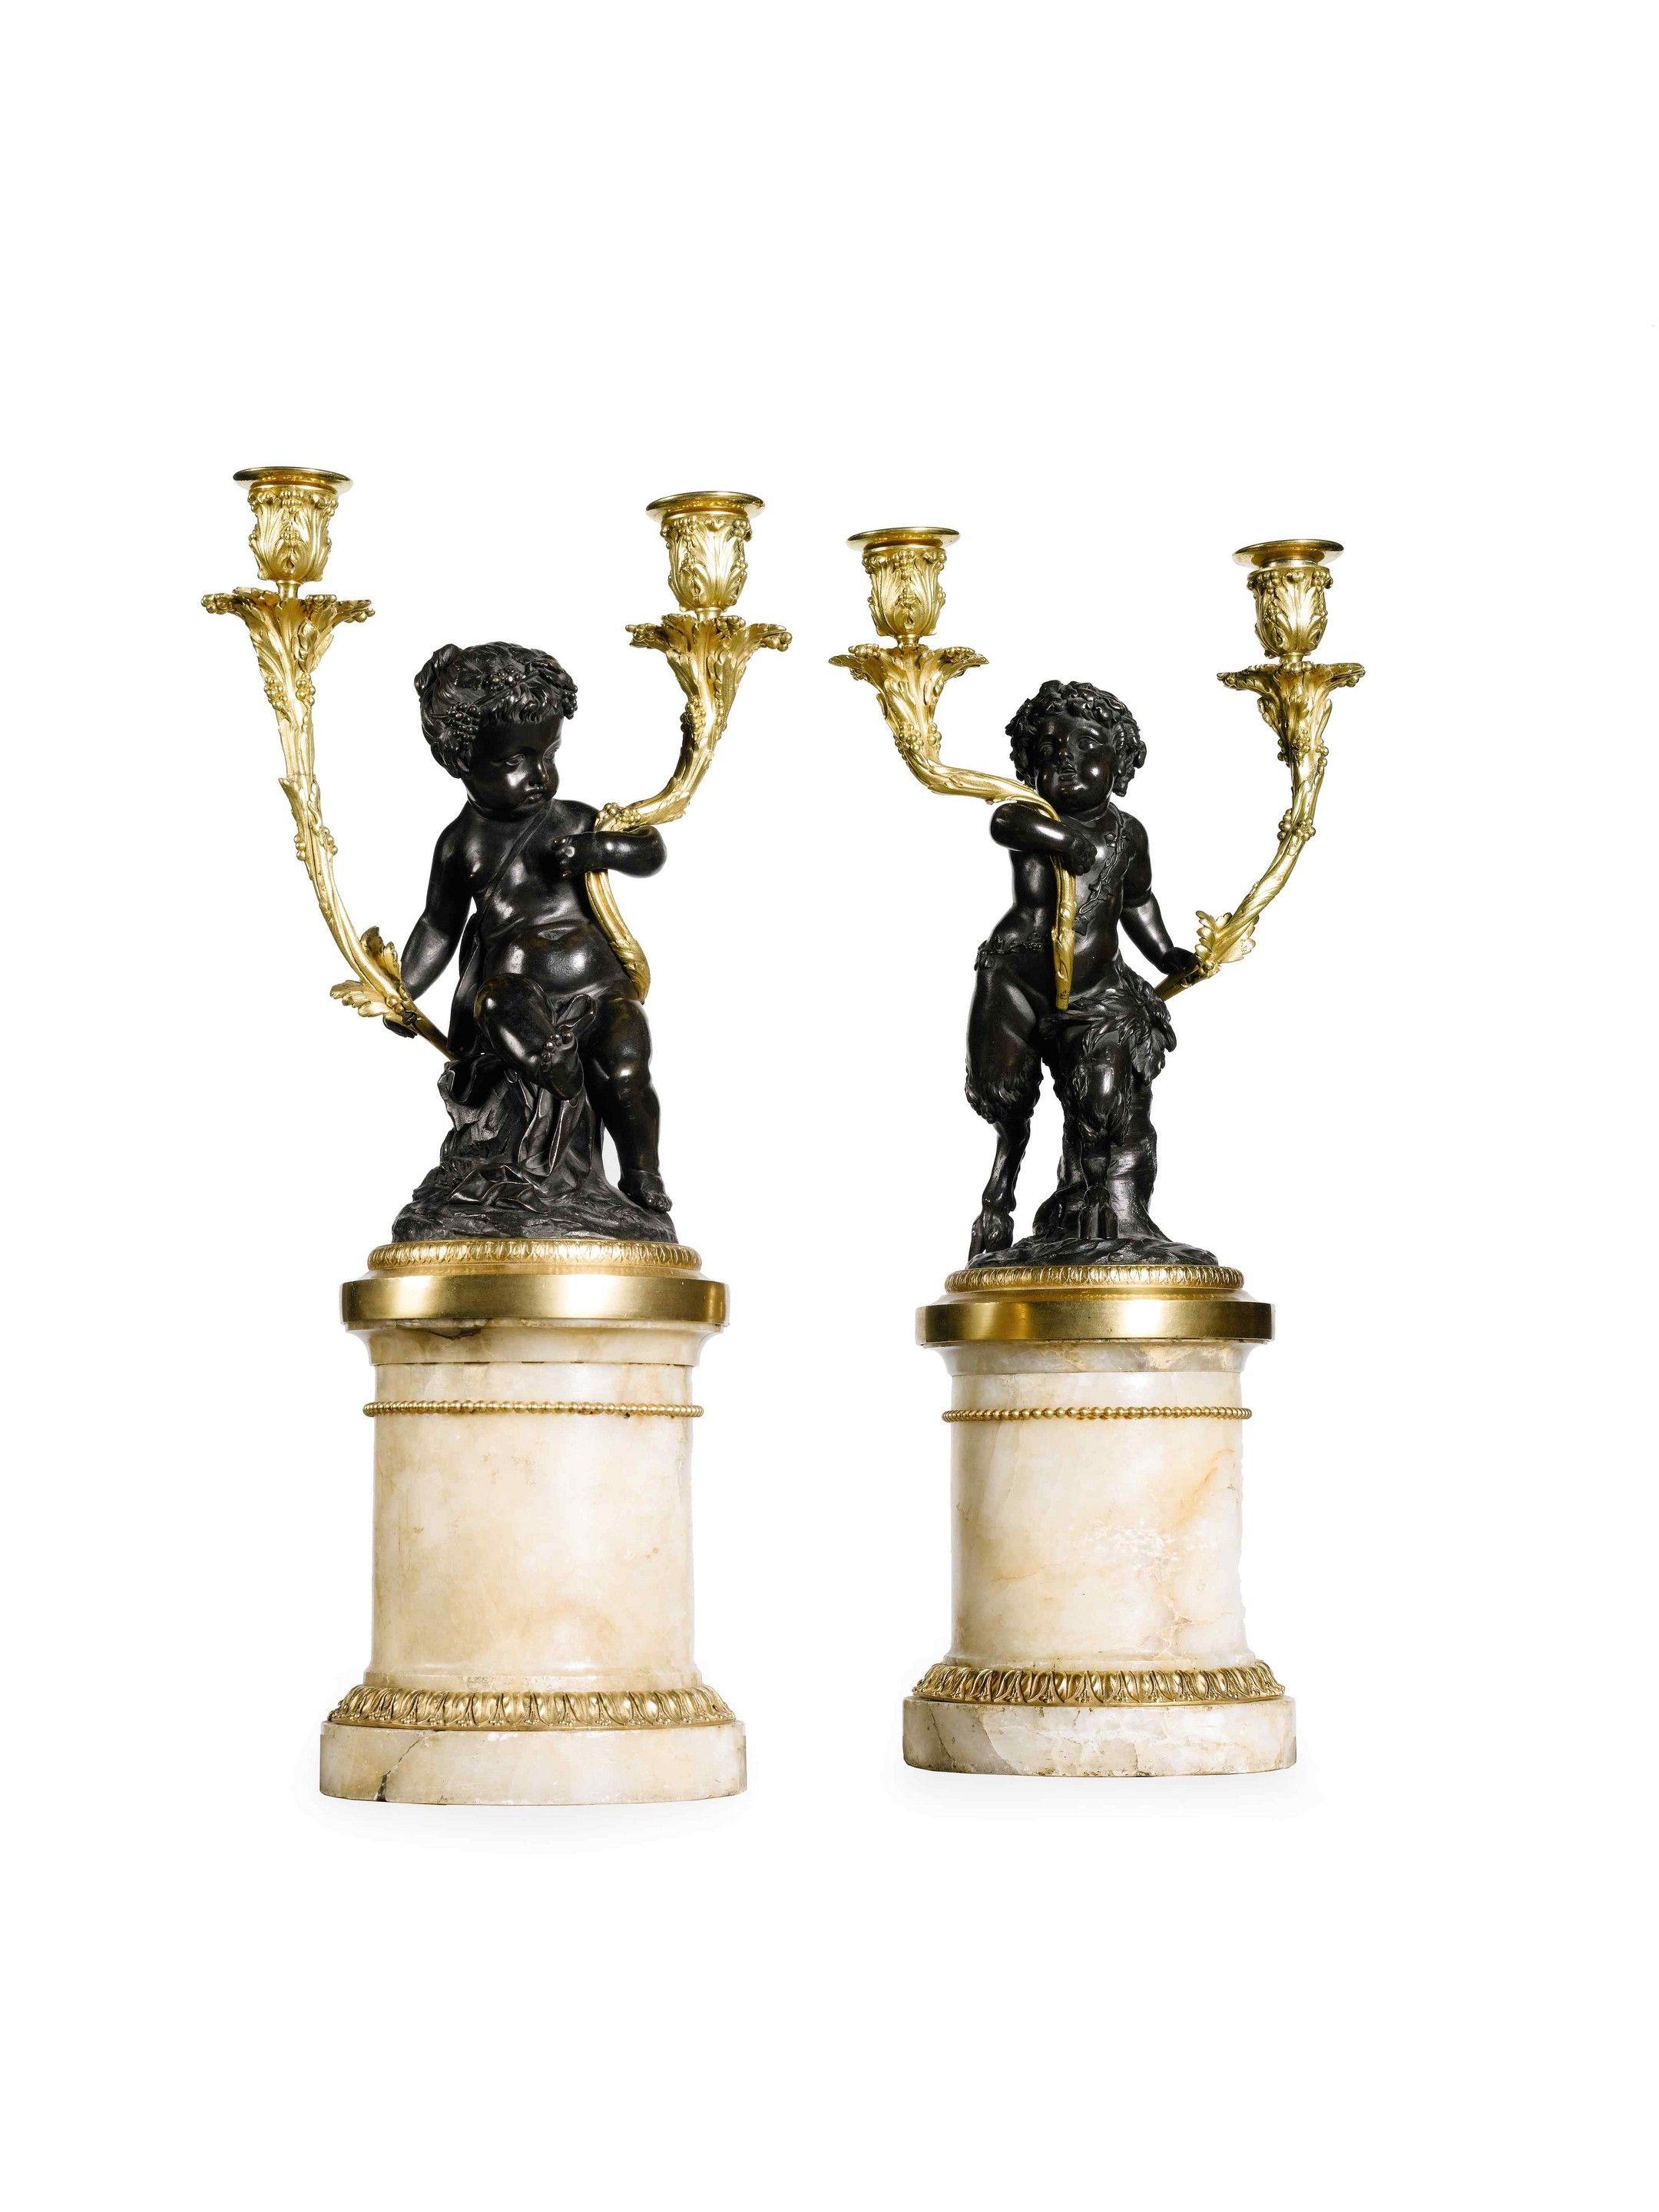 A pair of 19th century bronze, ormolu and fluorspar candelabra.